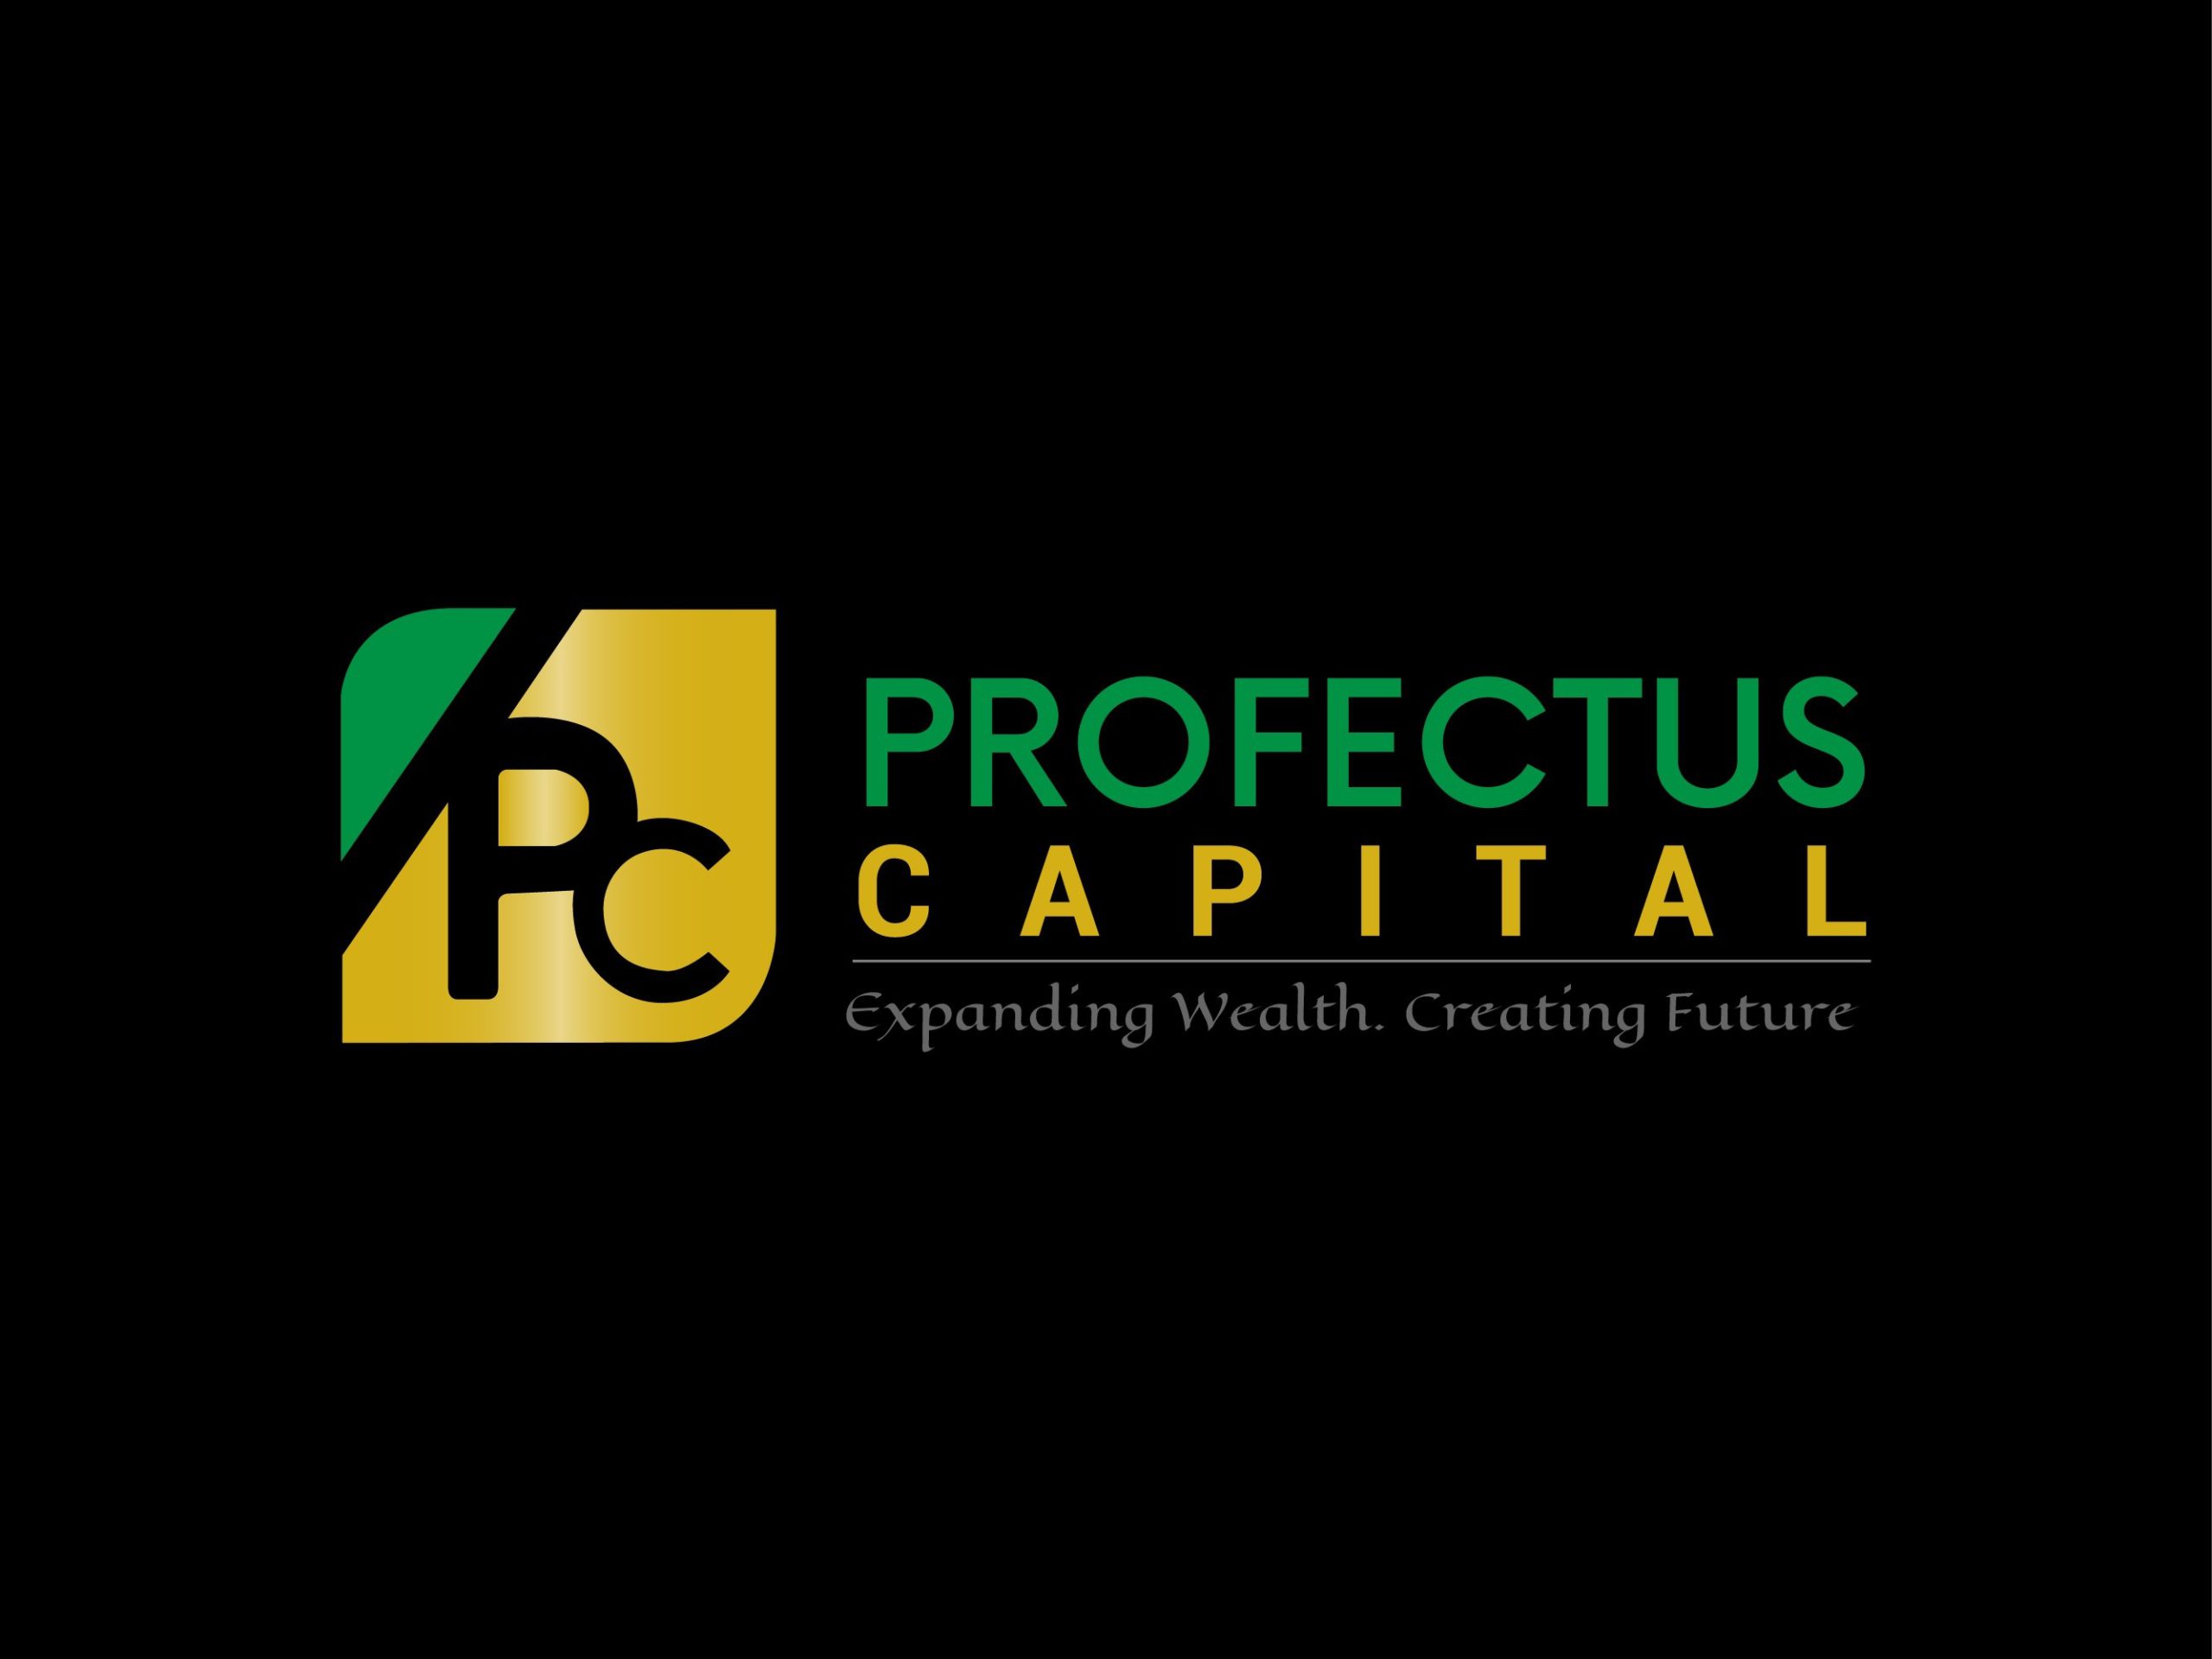 Profectus Capital Partners LeadSquared to Revolutionize SME Lending